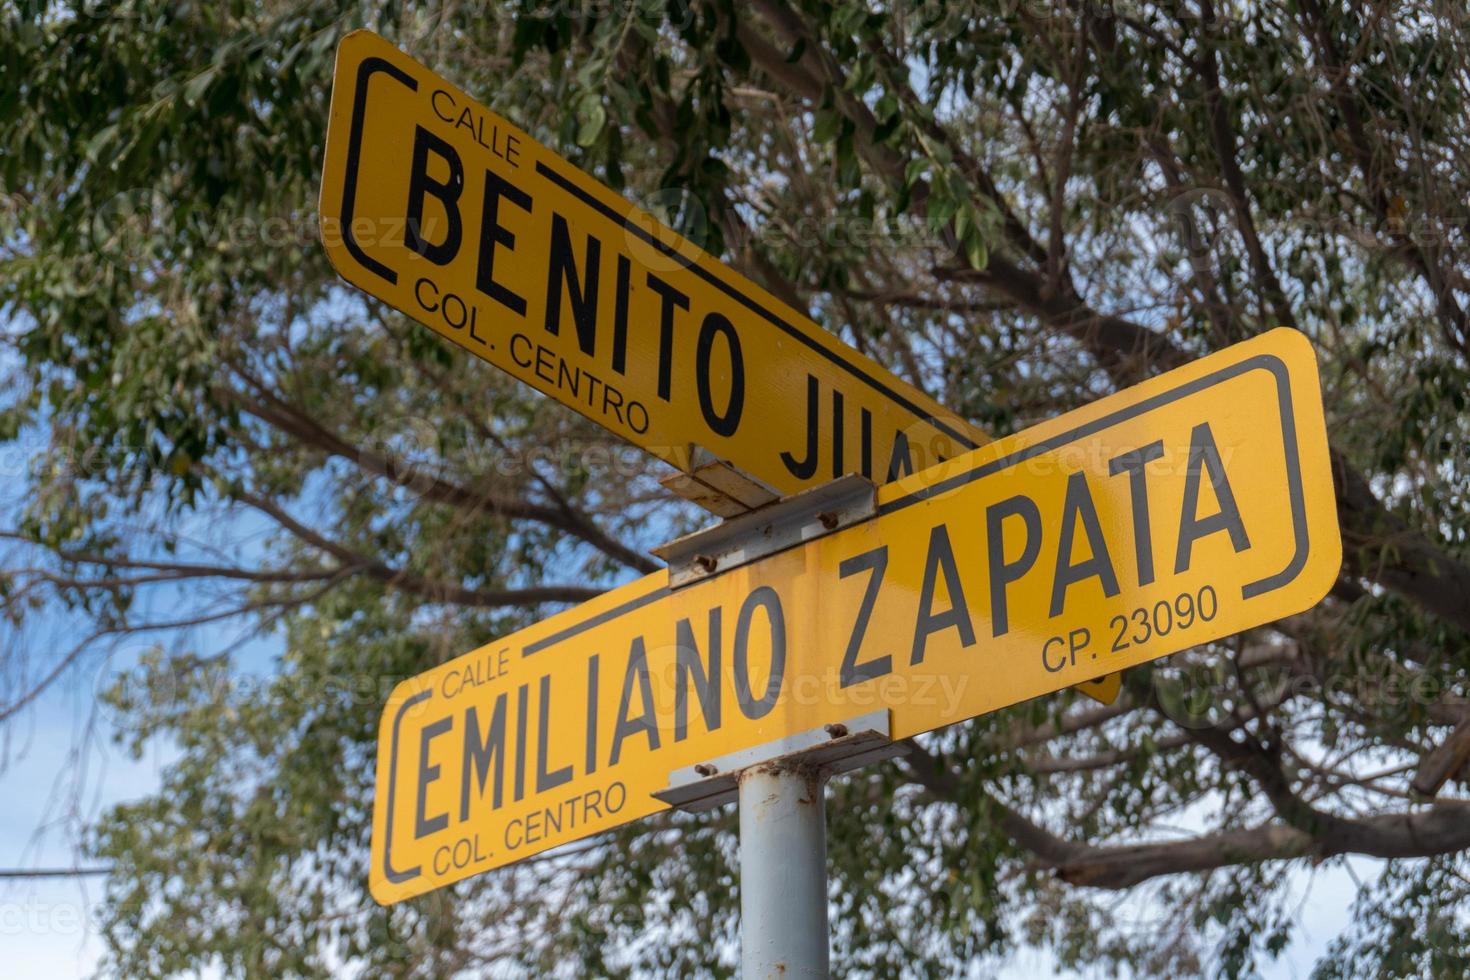 Mexican road street sign juarez zapata photo